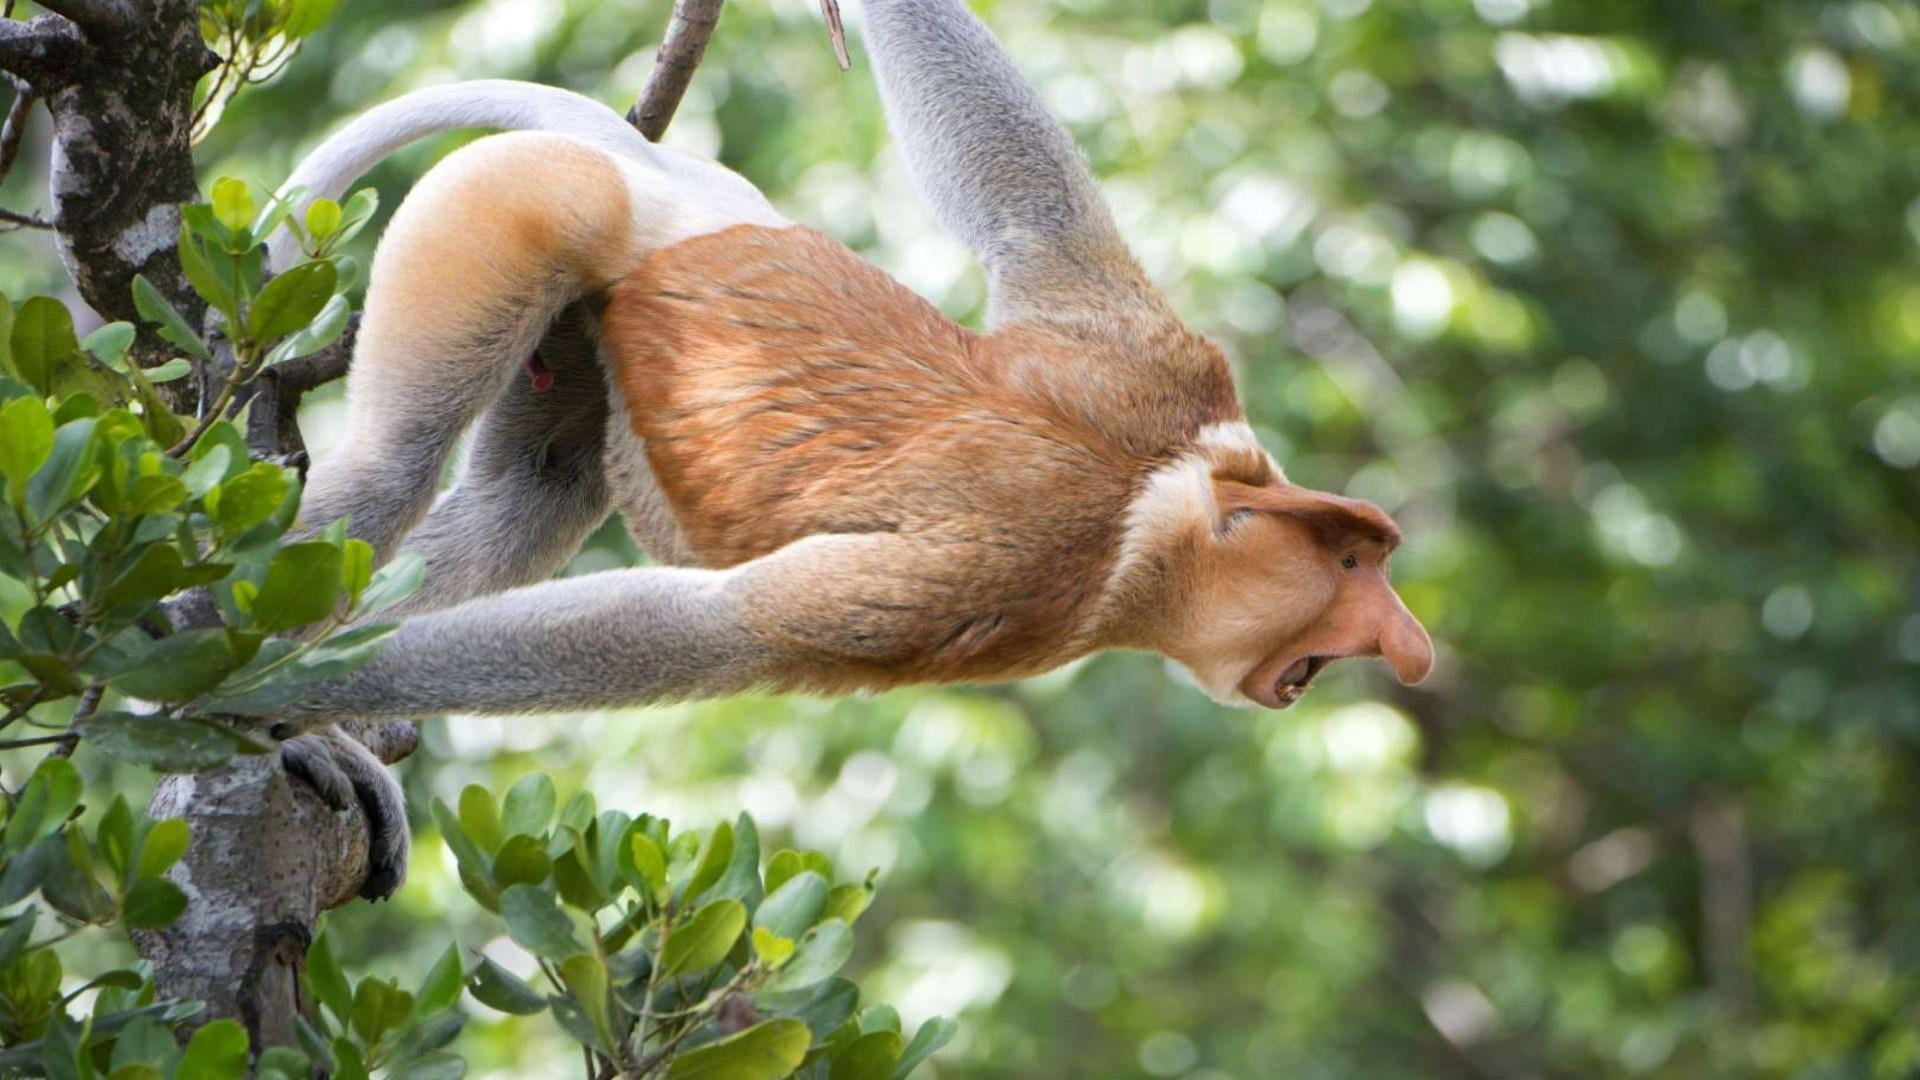 proboscis monkey, strange, wildlife, animal themes, mammal